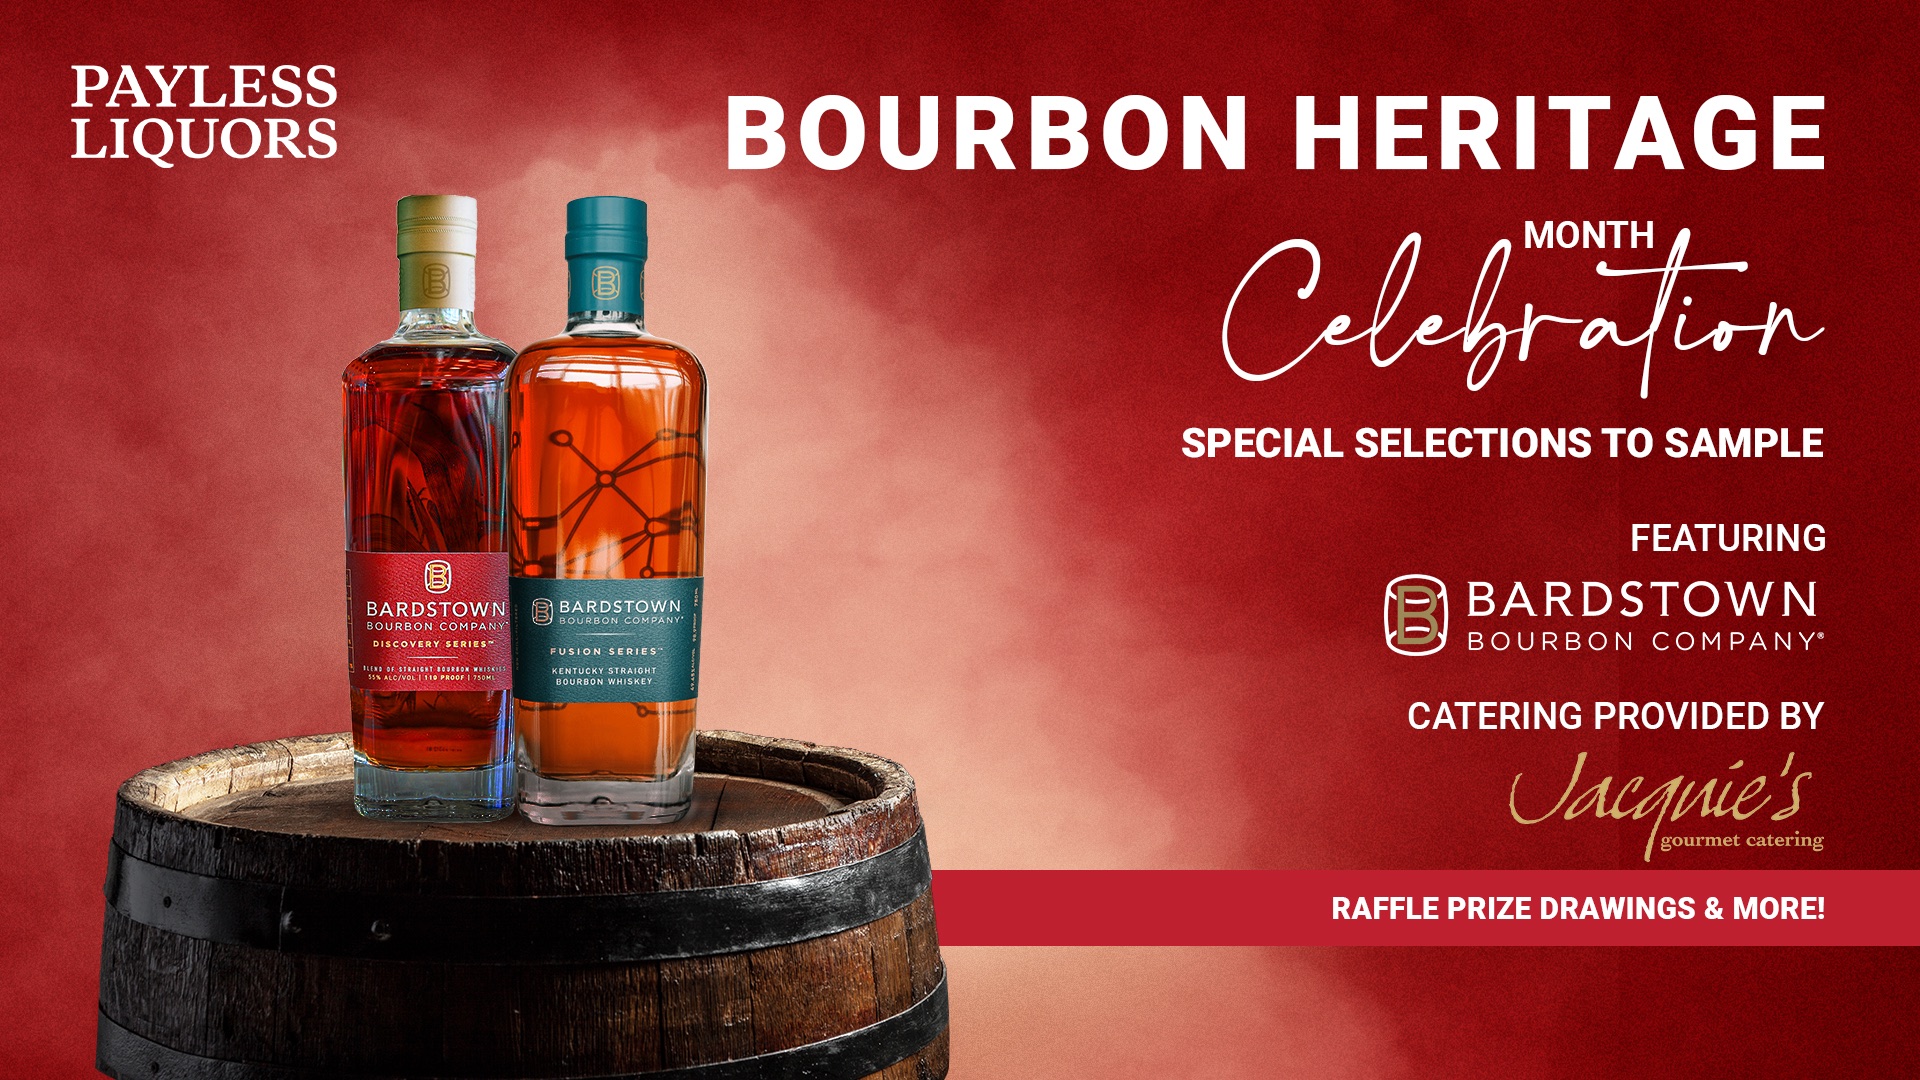 bourbon heritage month